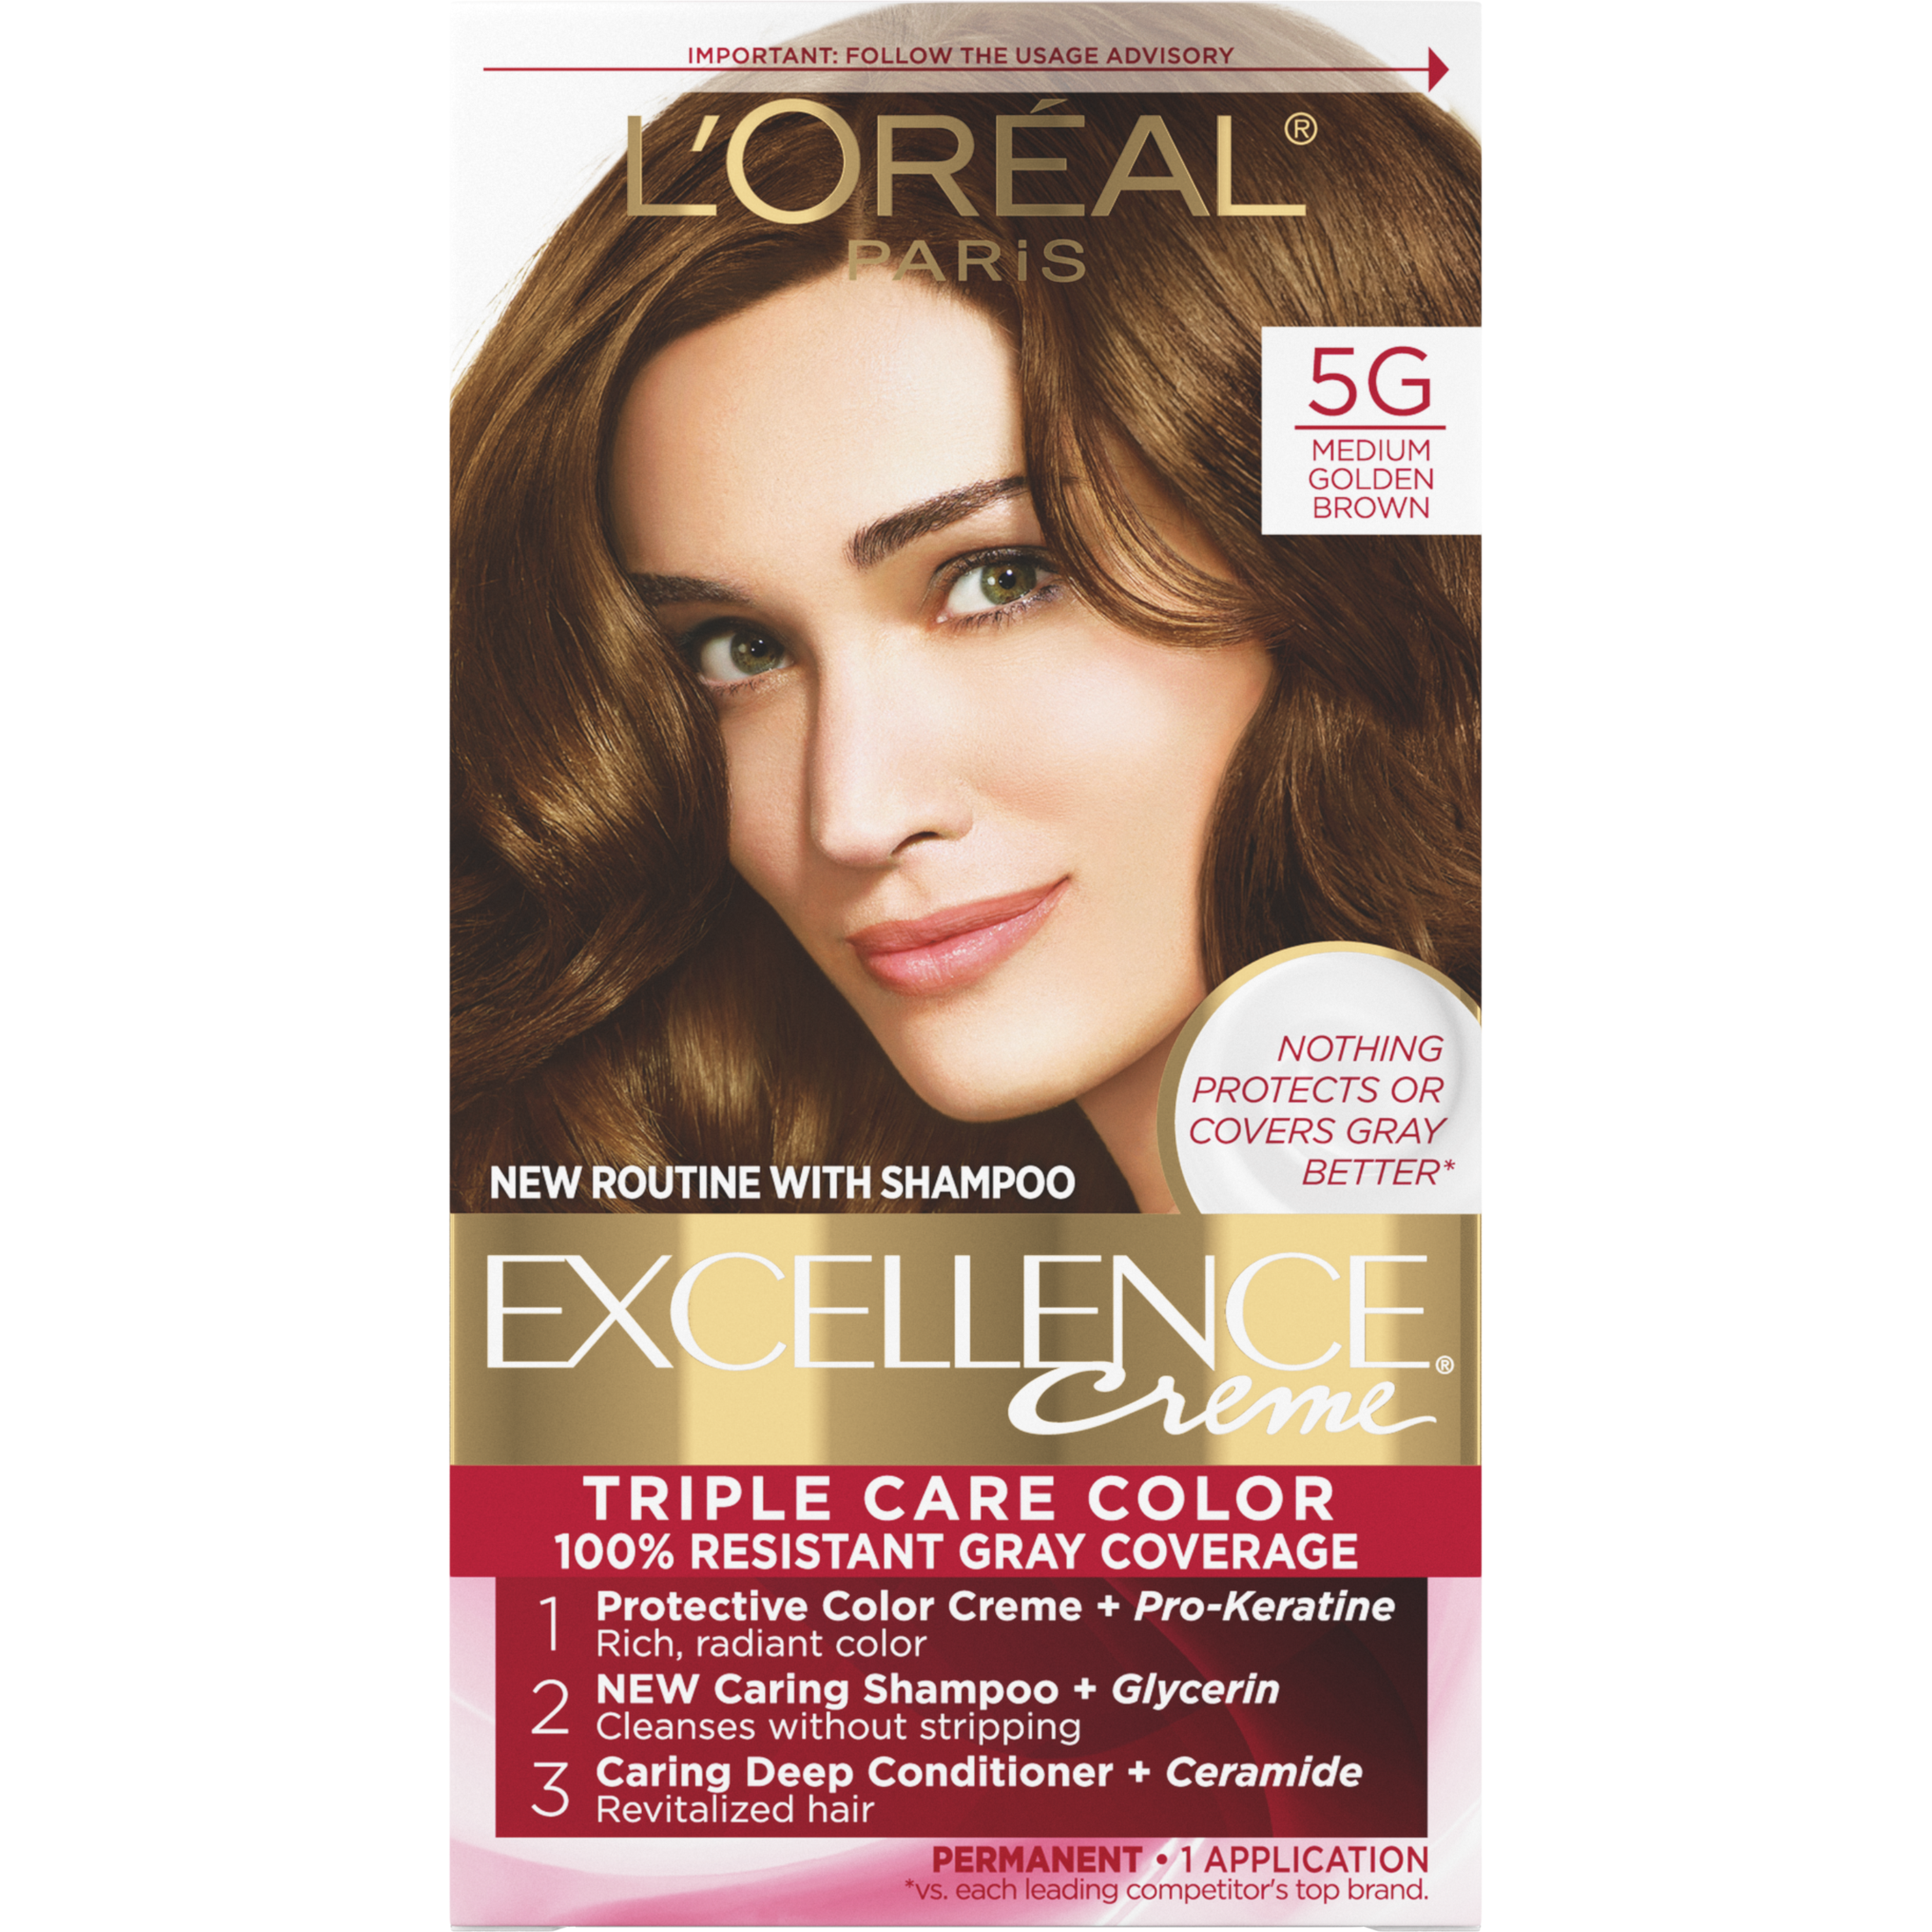 L'Oreal Paris Excellence Creme Permanent Hair Color, 5G Medium Golden Brown - image 1 of 9